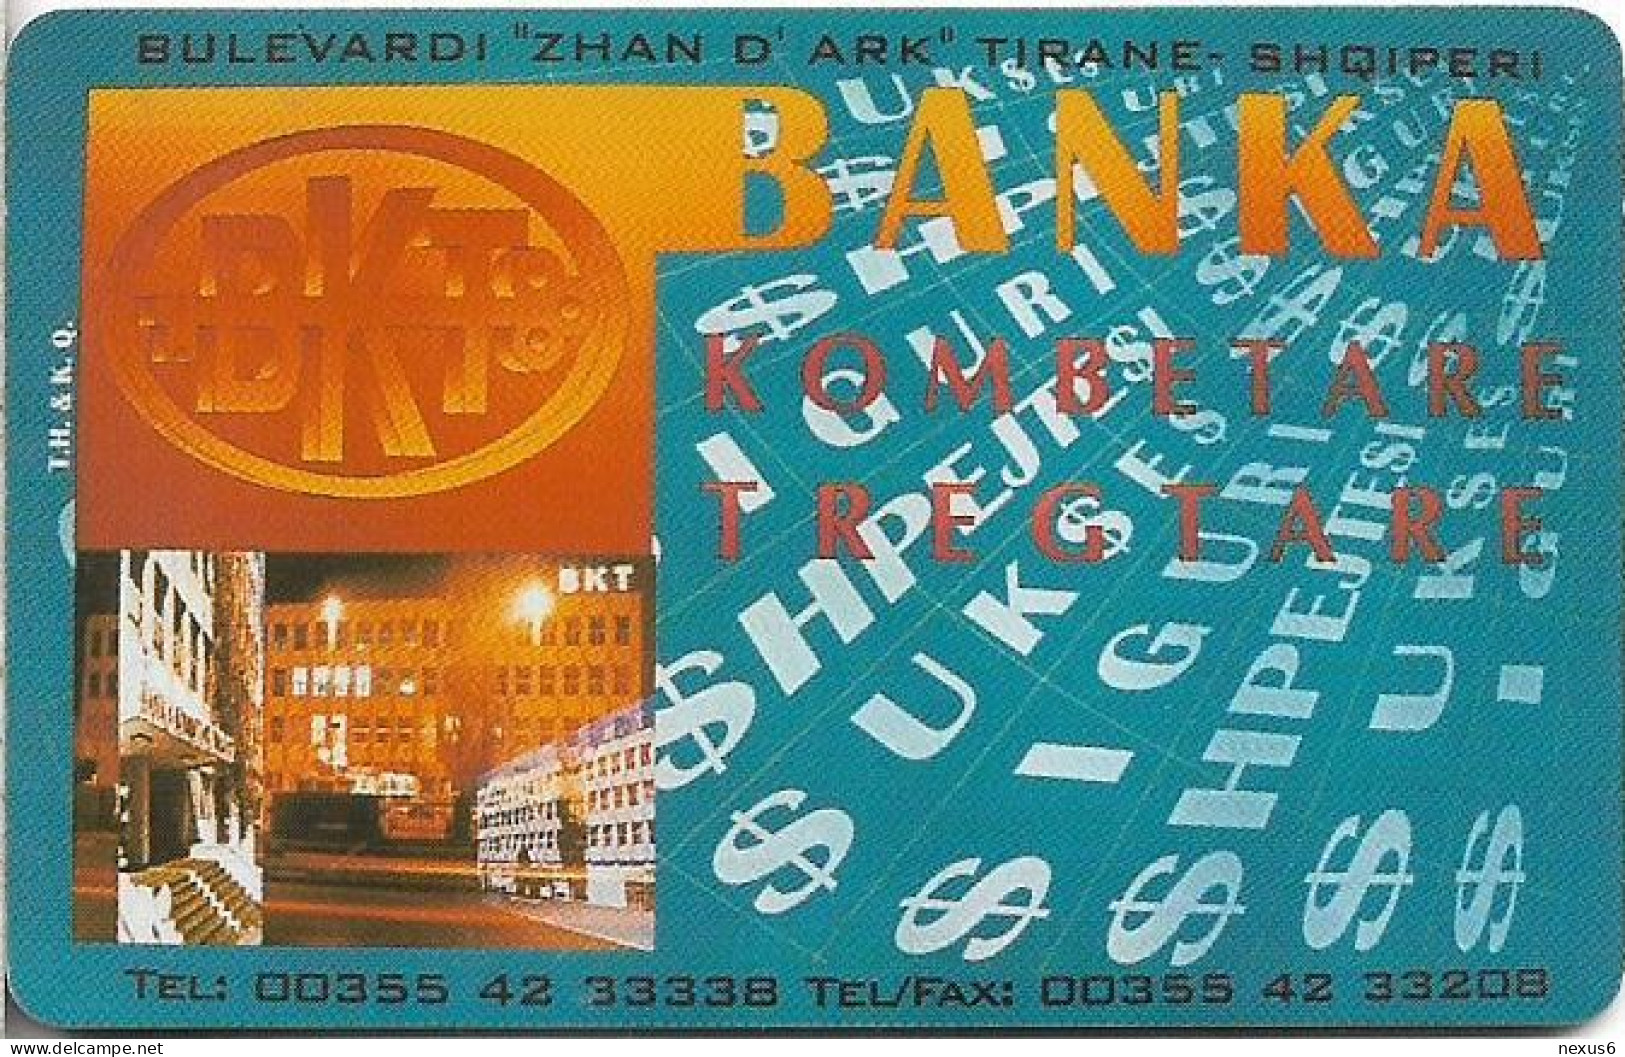 Albania - Albtelecom - BKT Bank - ALB-10, 12.1996, 200Units, 15.000ex, Used - Albania